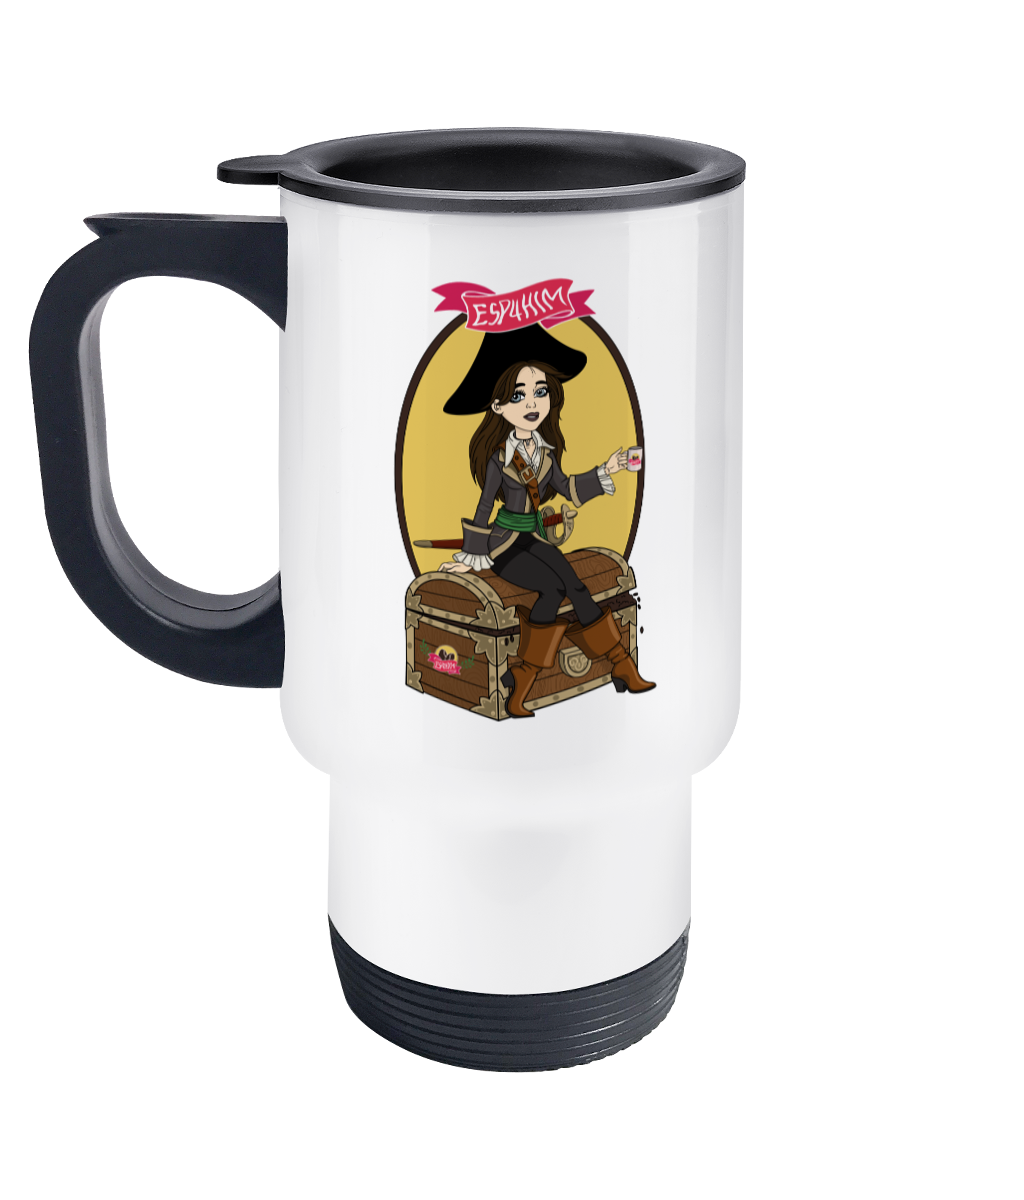 ESP4HIM 'Coffee Hoarding Pirate' Travel Mug